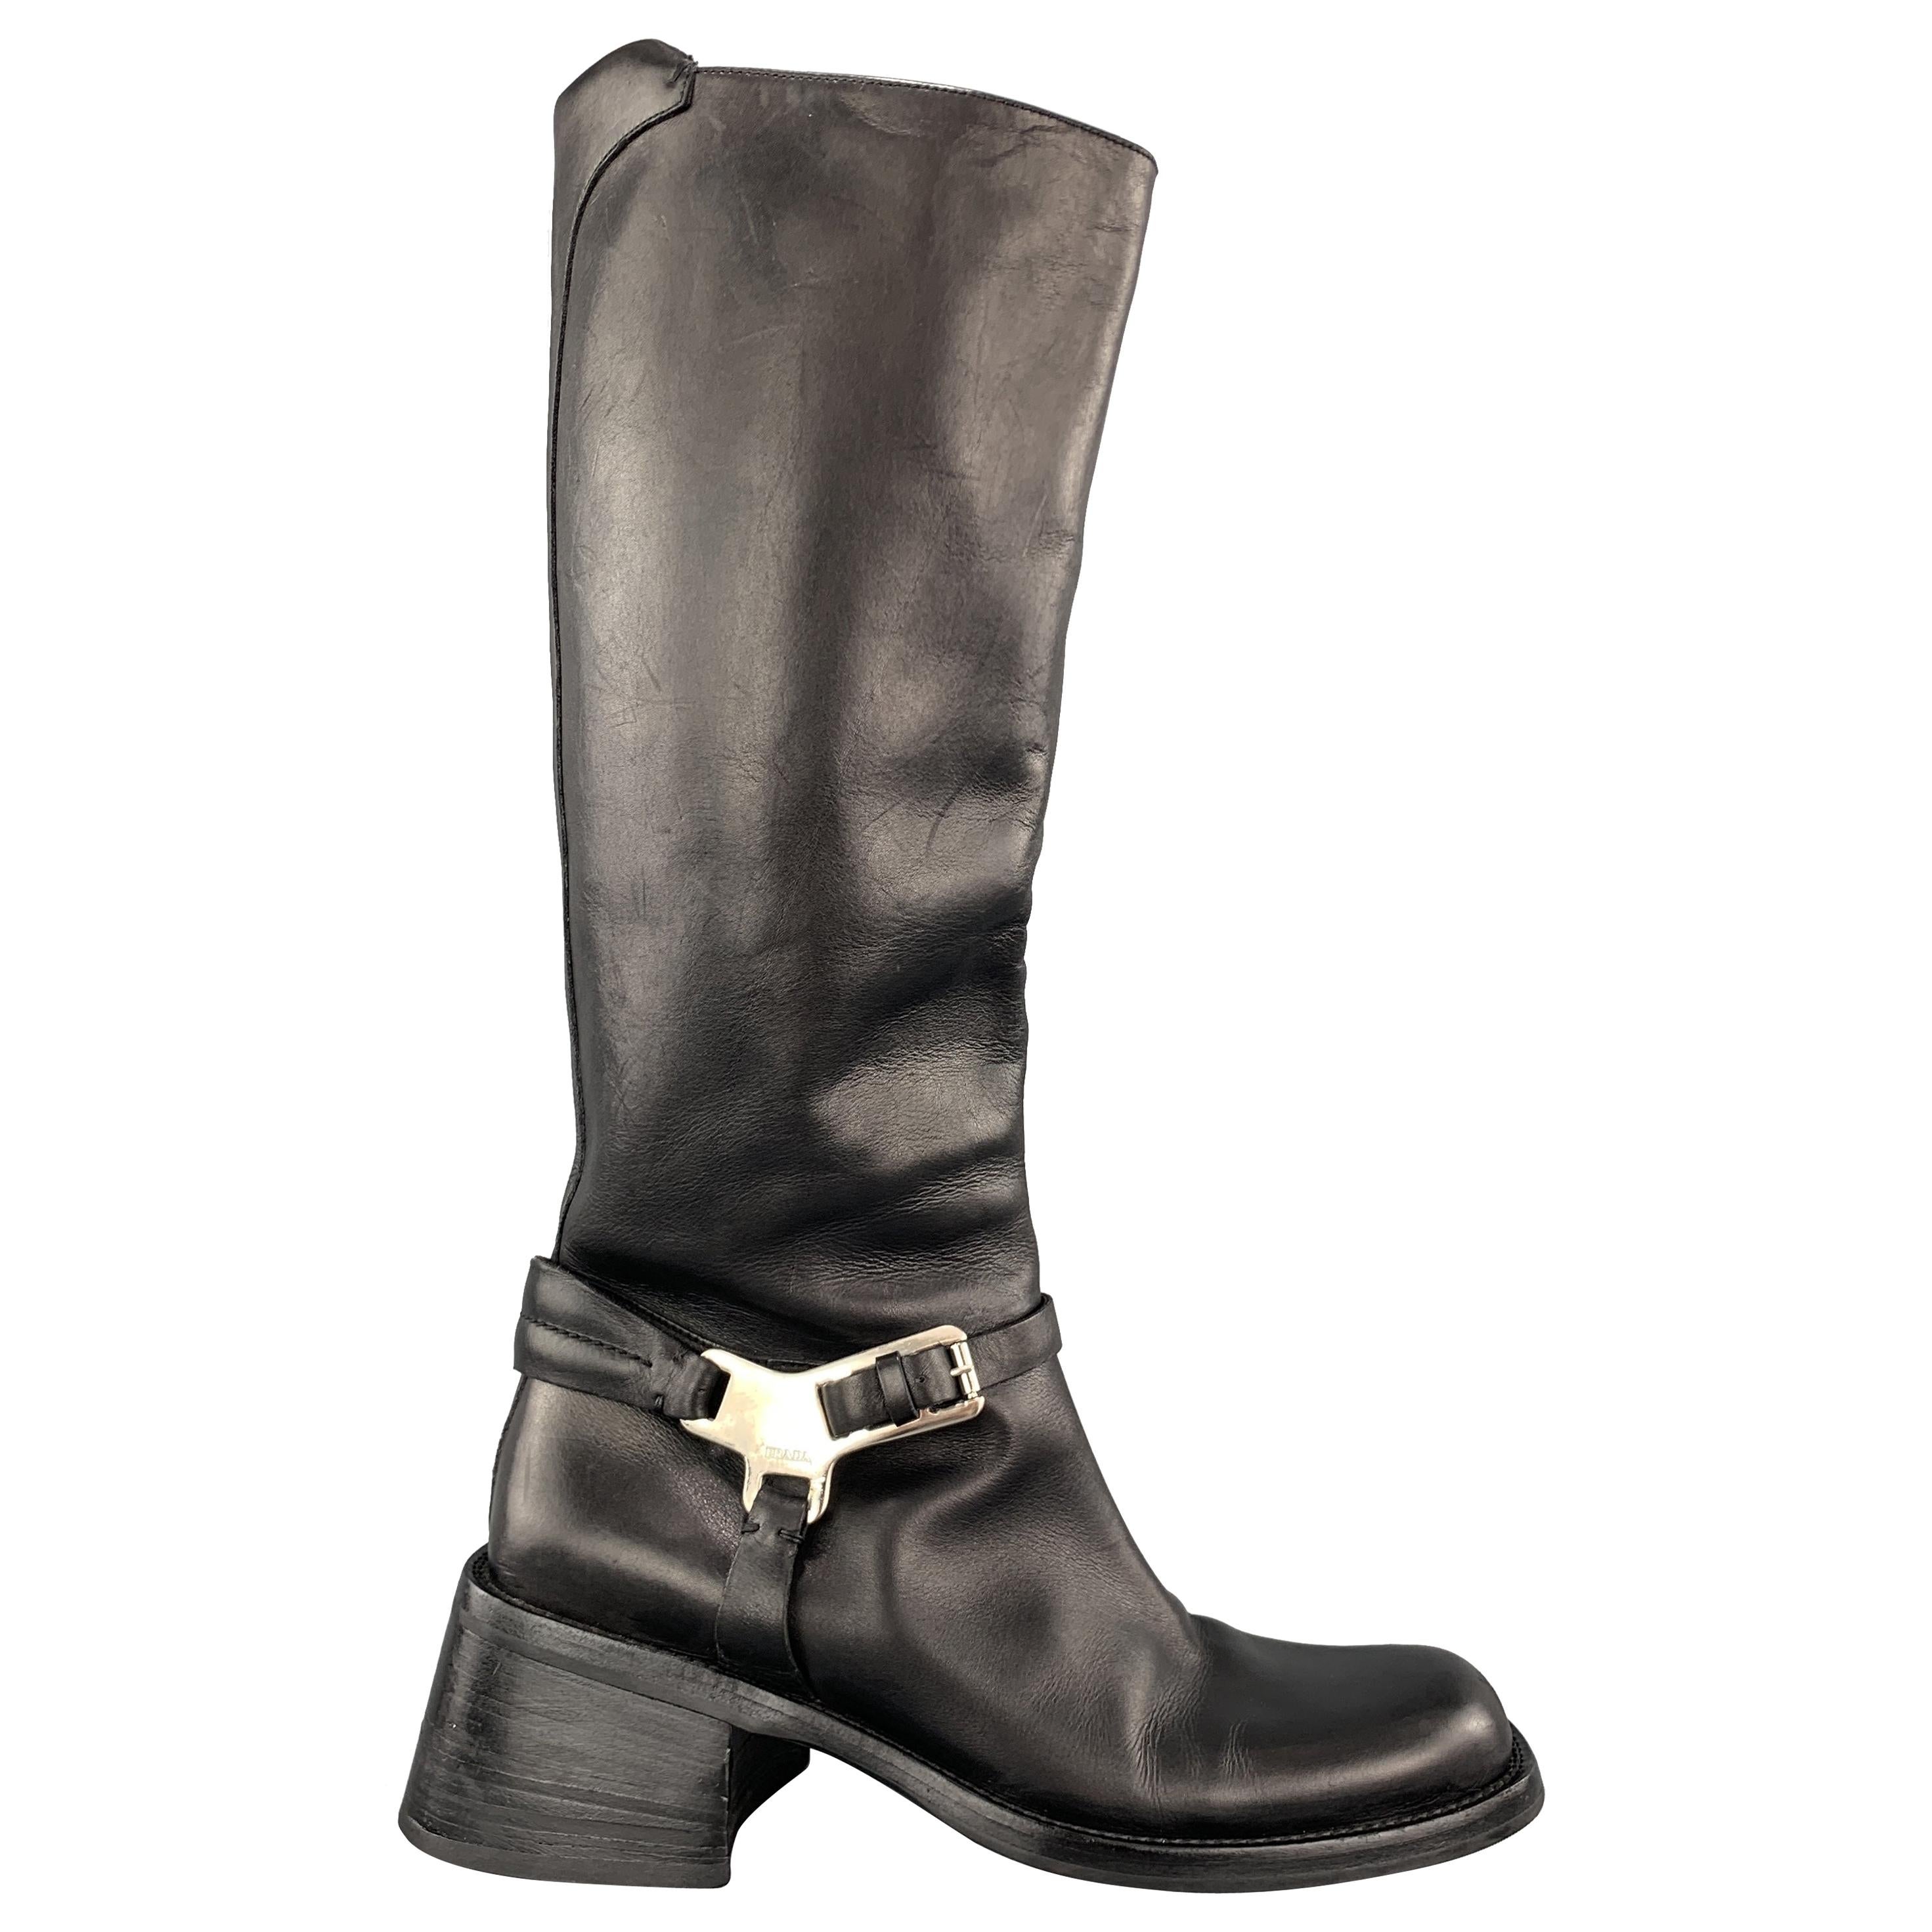 PRADA Size 7 Black Leather Knee High Harness Boots